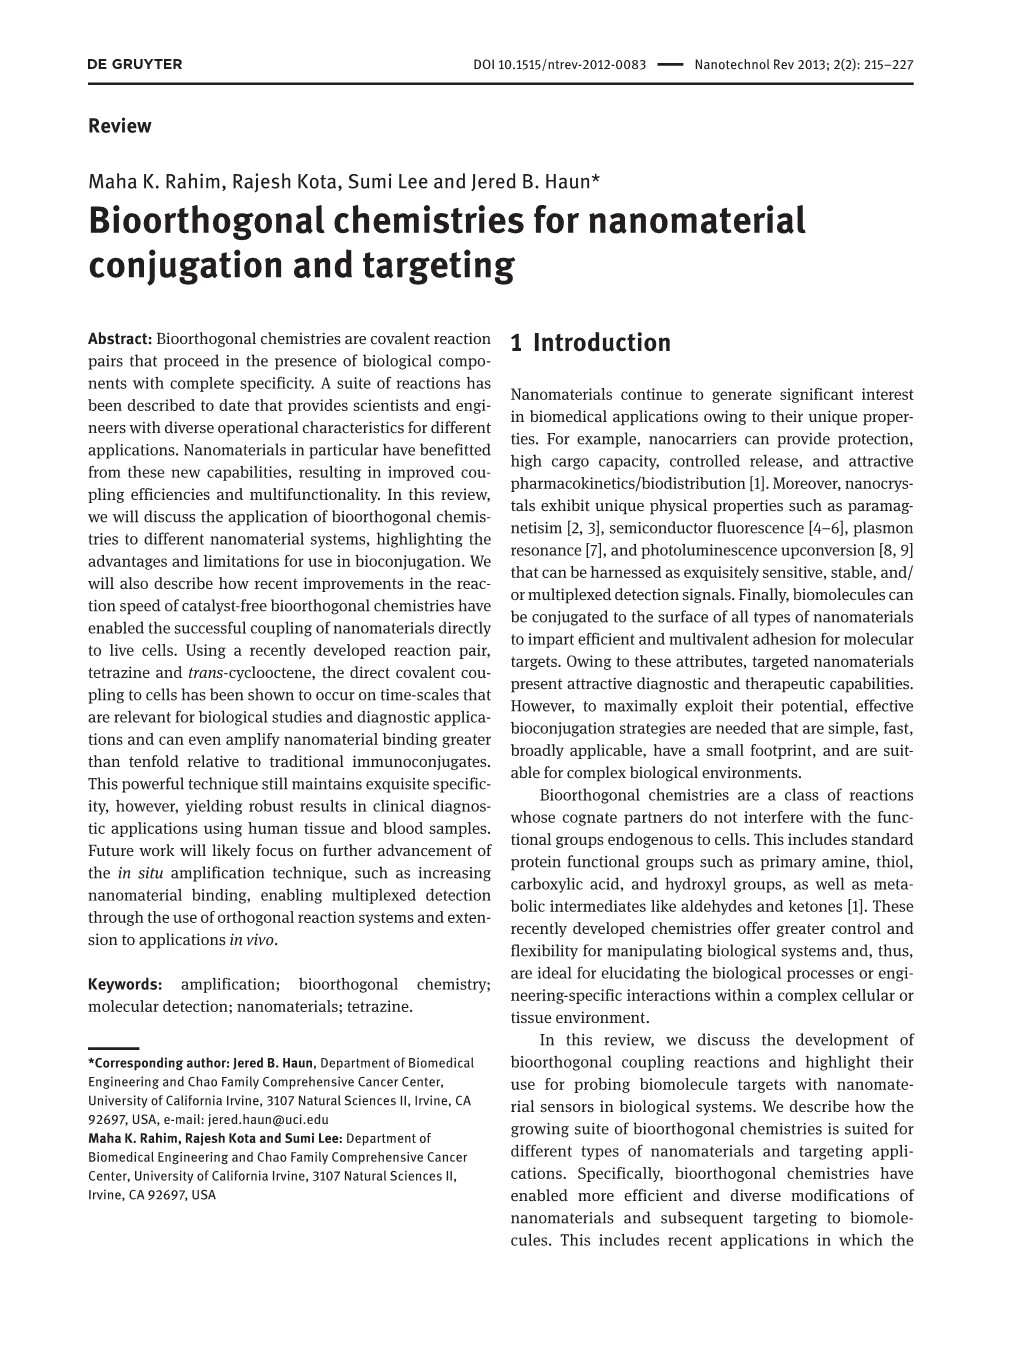 Bioorthogonal Chemistries for Nanomaterial Conjugation and Targeting